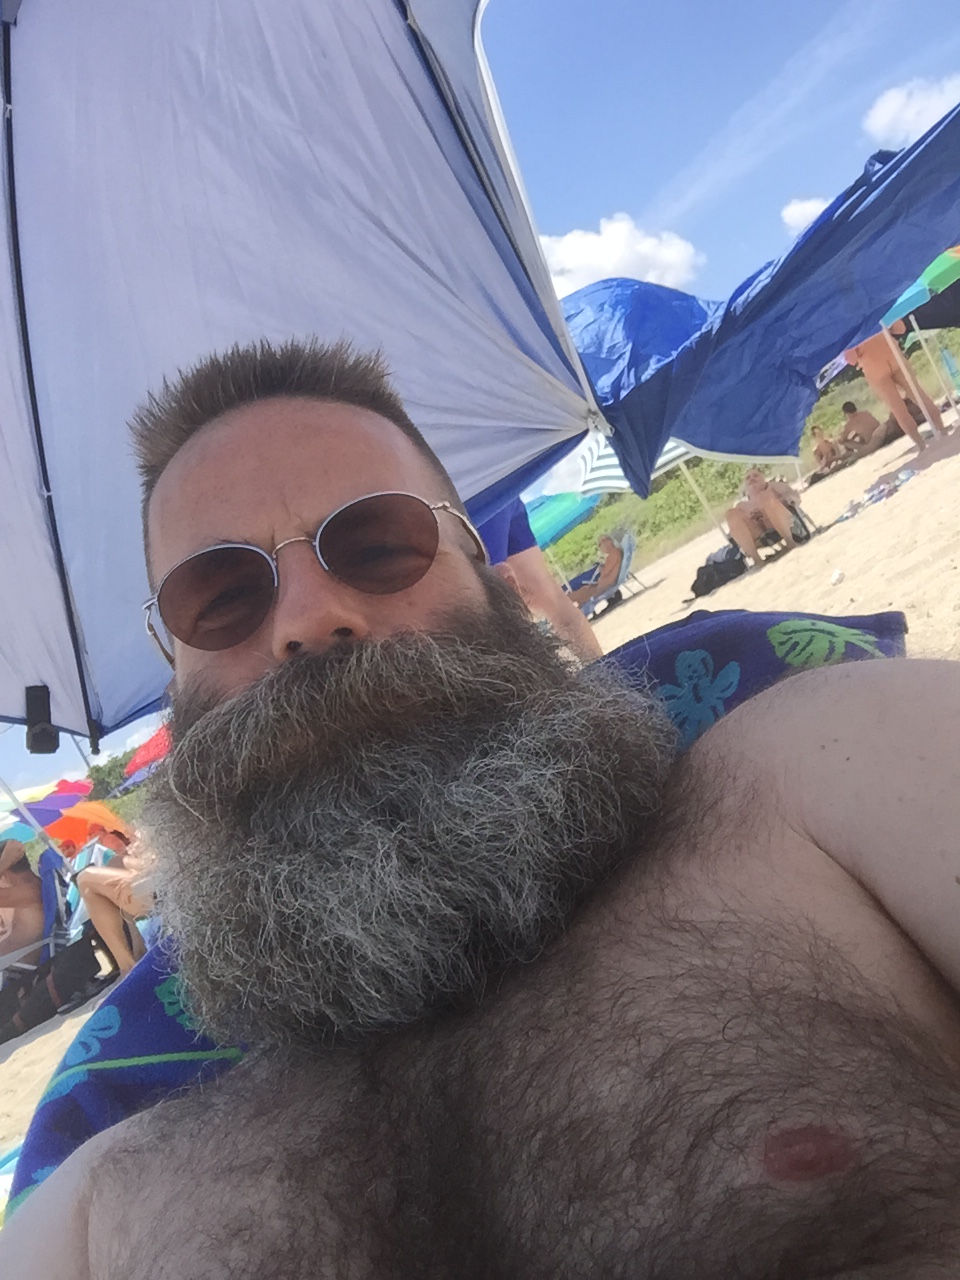 Naked Beach - A day at the beach | Fearsome Beard